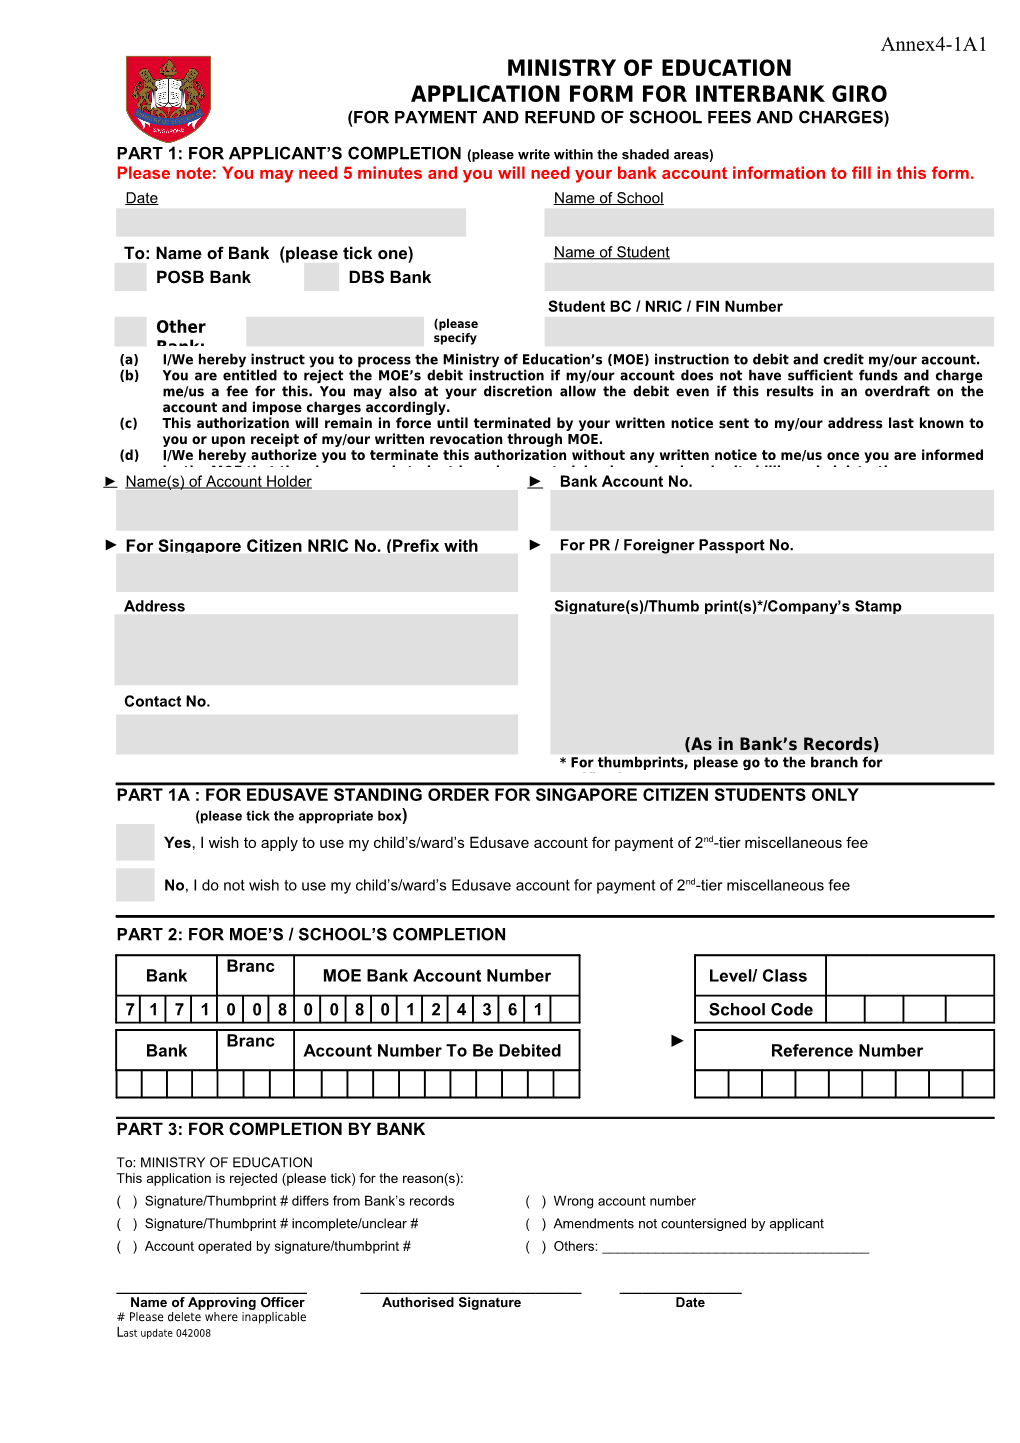 Application Form for Interbank Giro s1